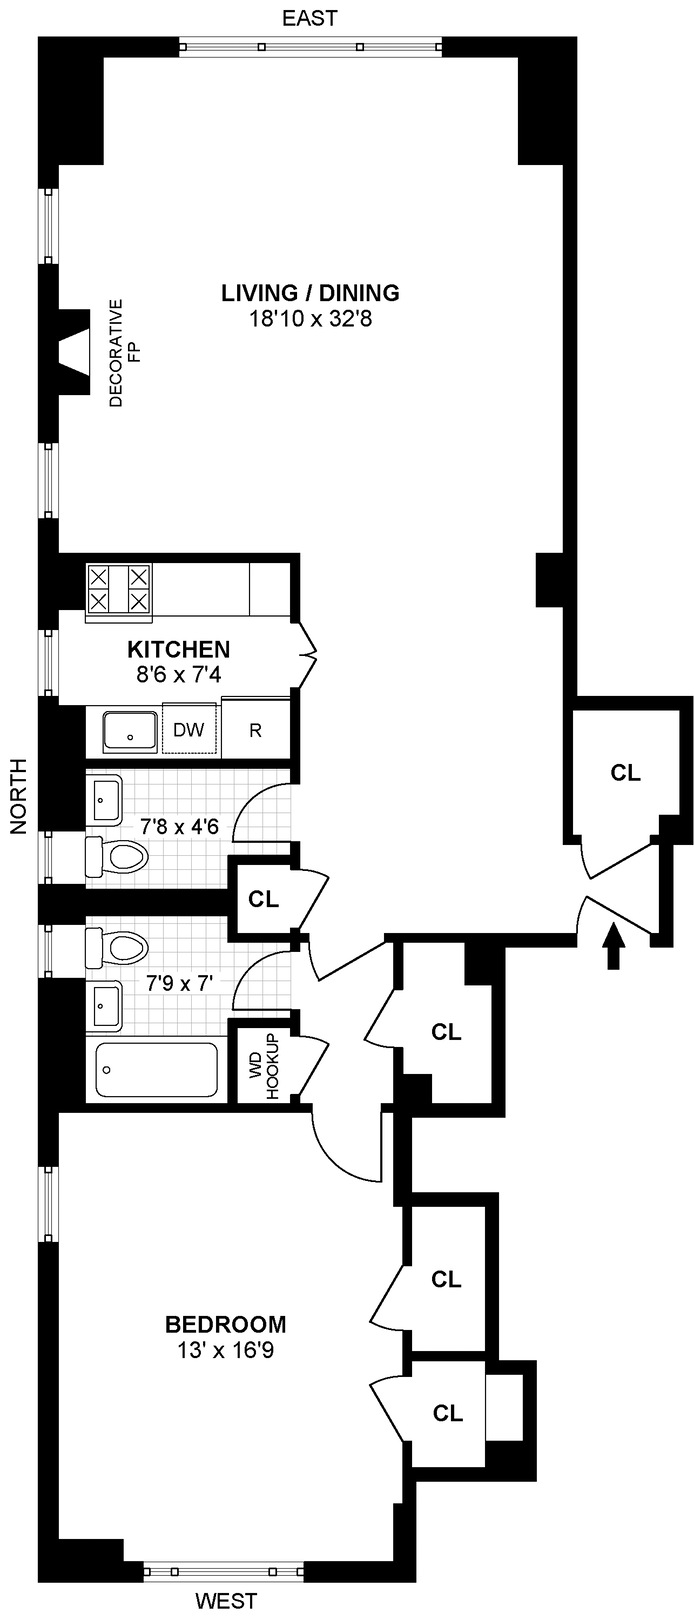 Floorplan for 135 East 71st Street